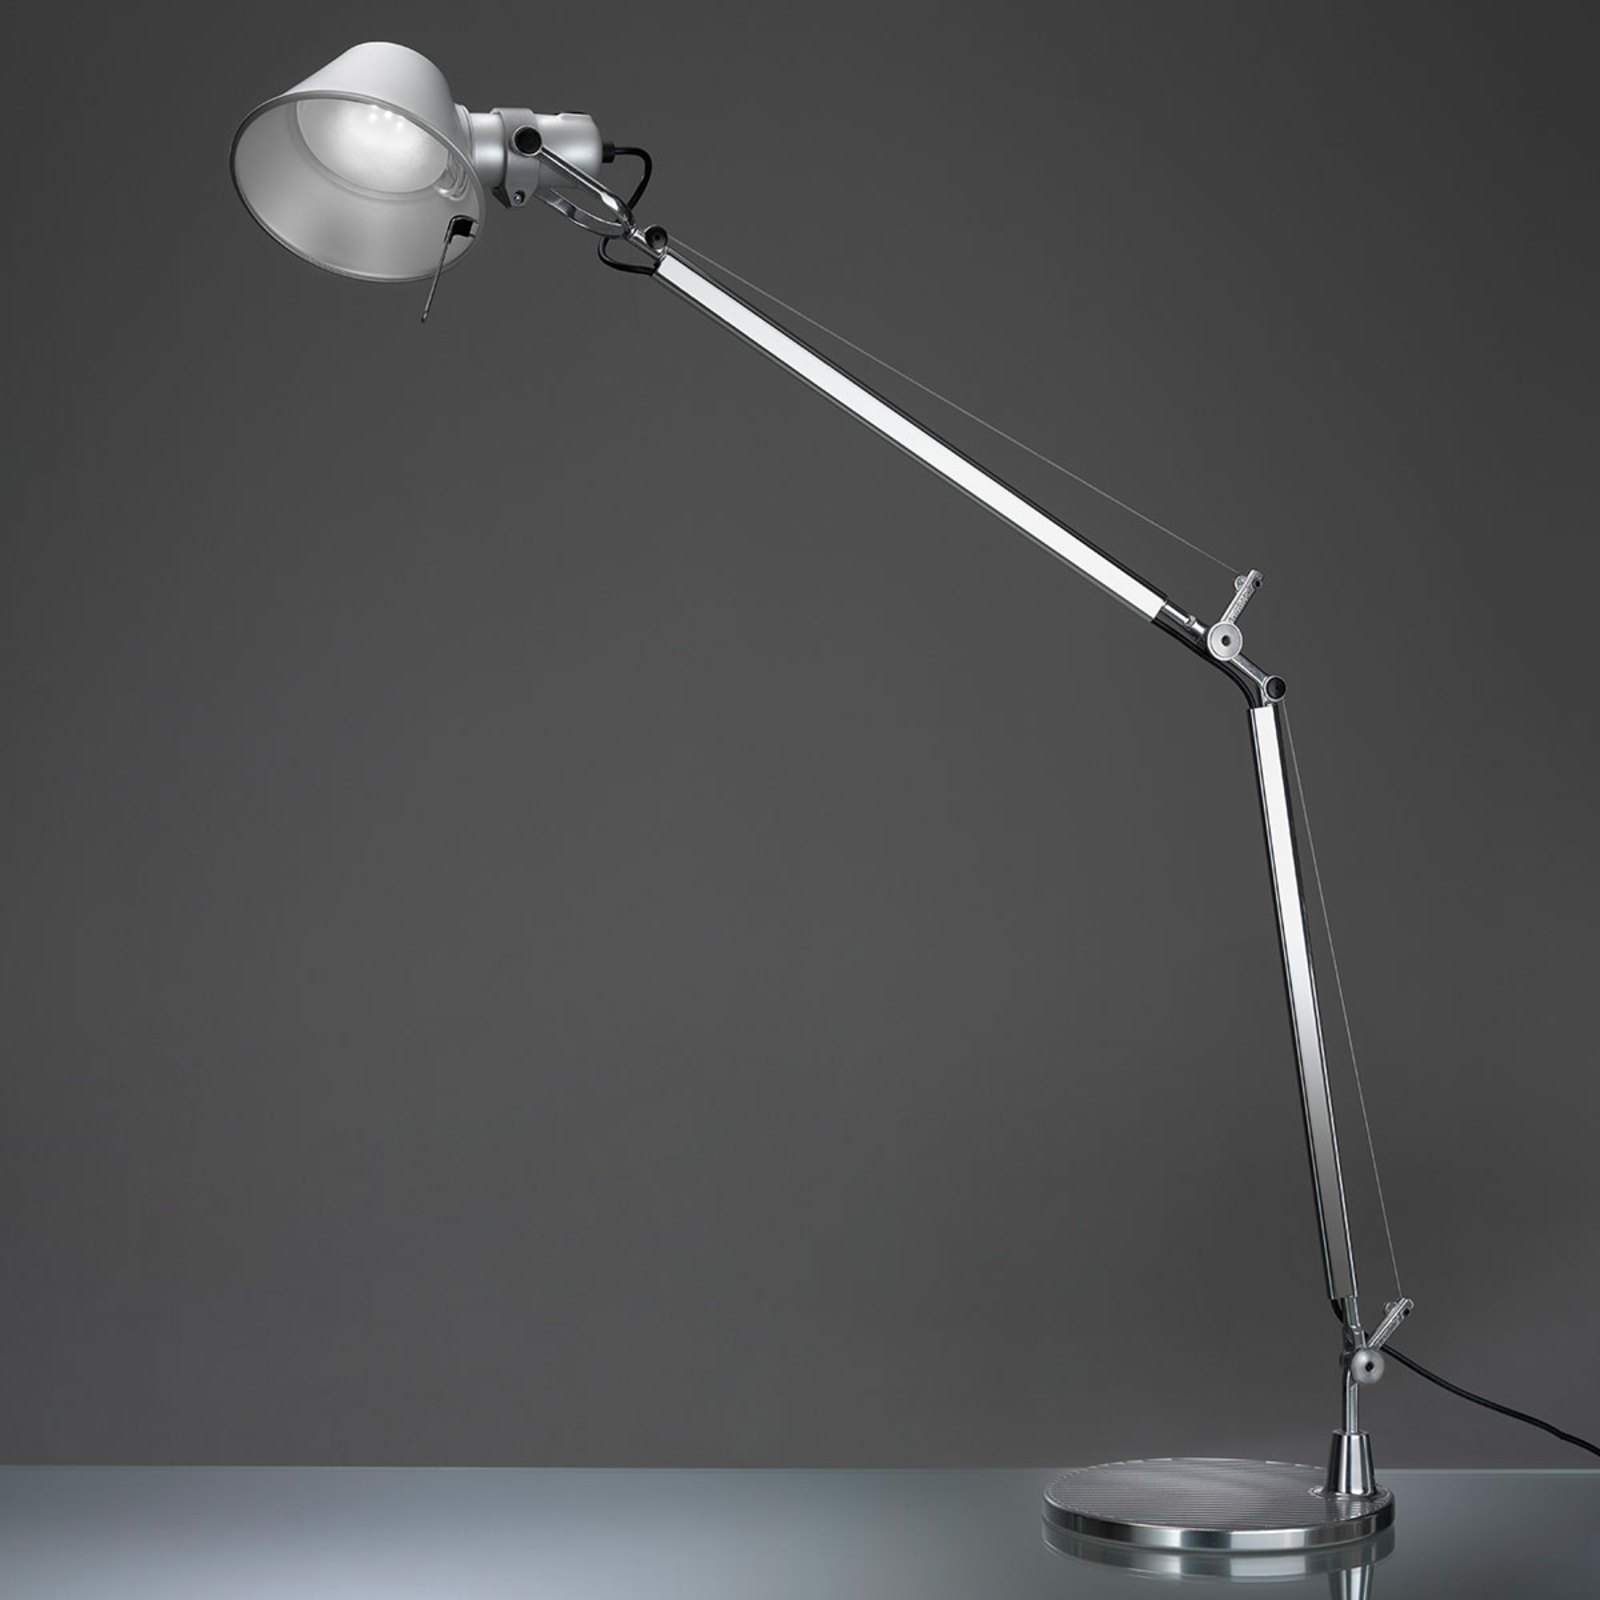 Artemide Tolomeo table lamp presence sensor 3,000K